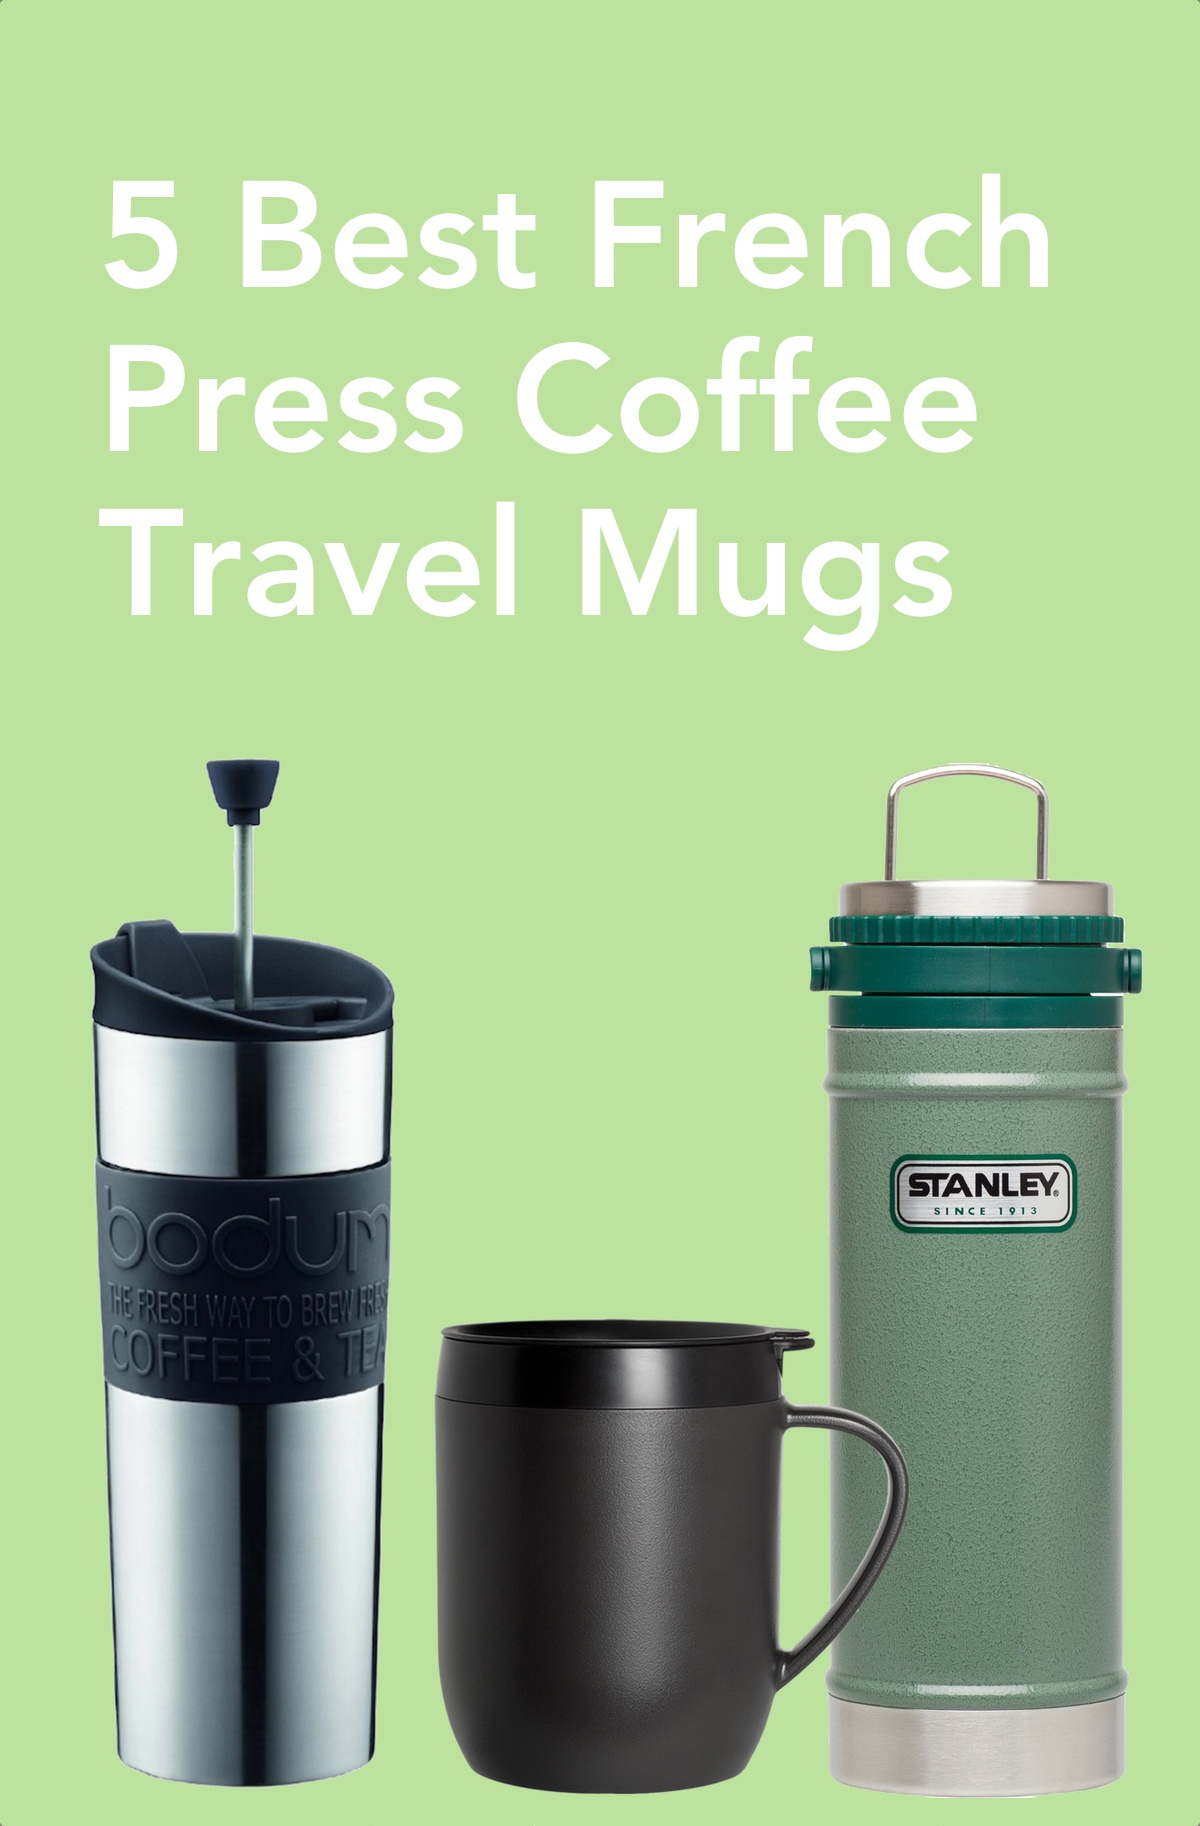 5 Best French Press Coffee Travel Mugs CoffeeSphere